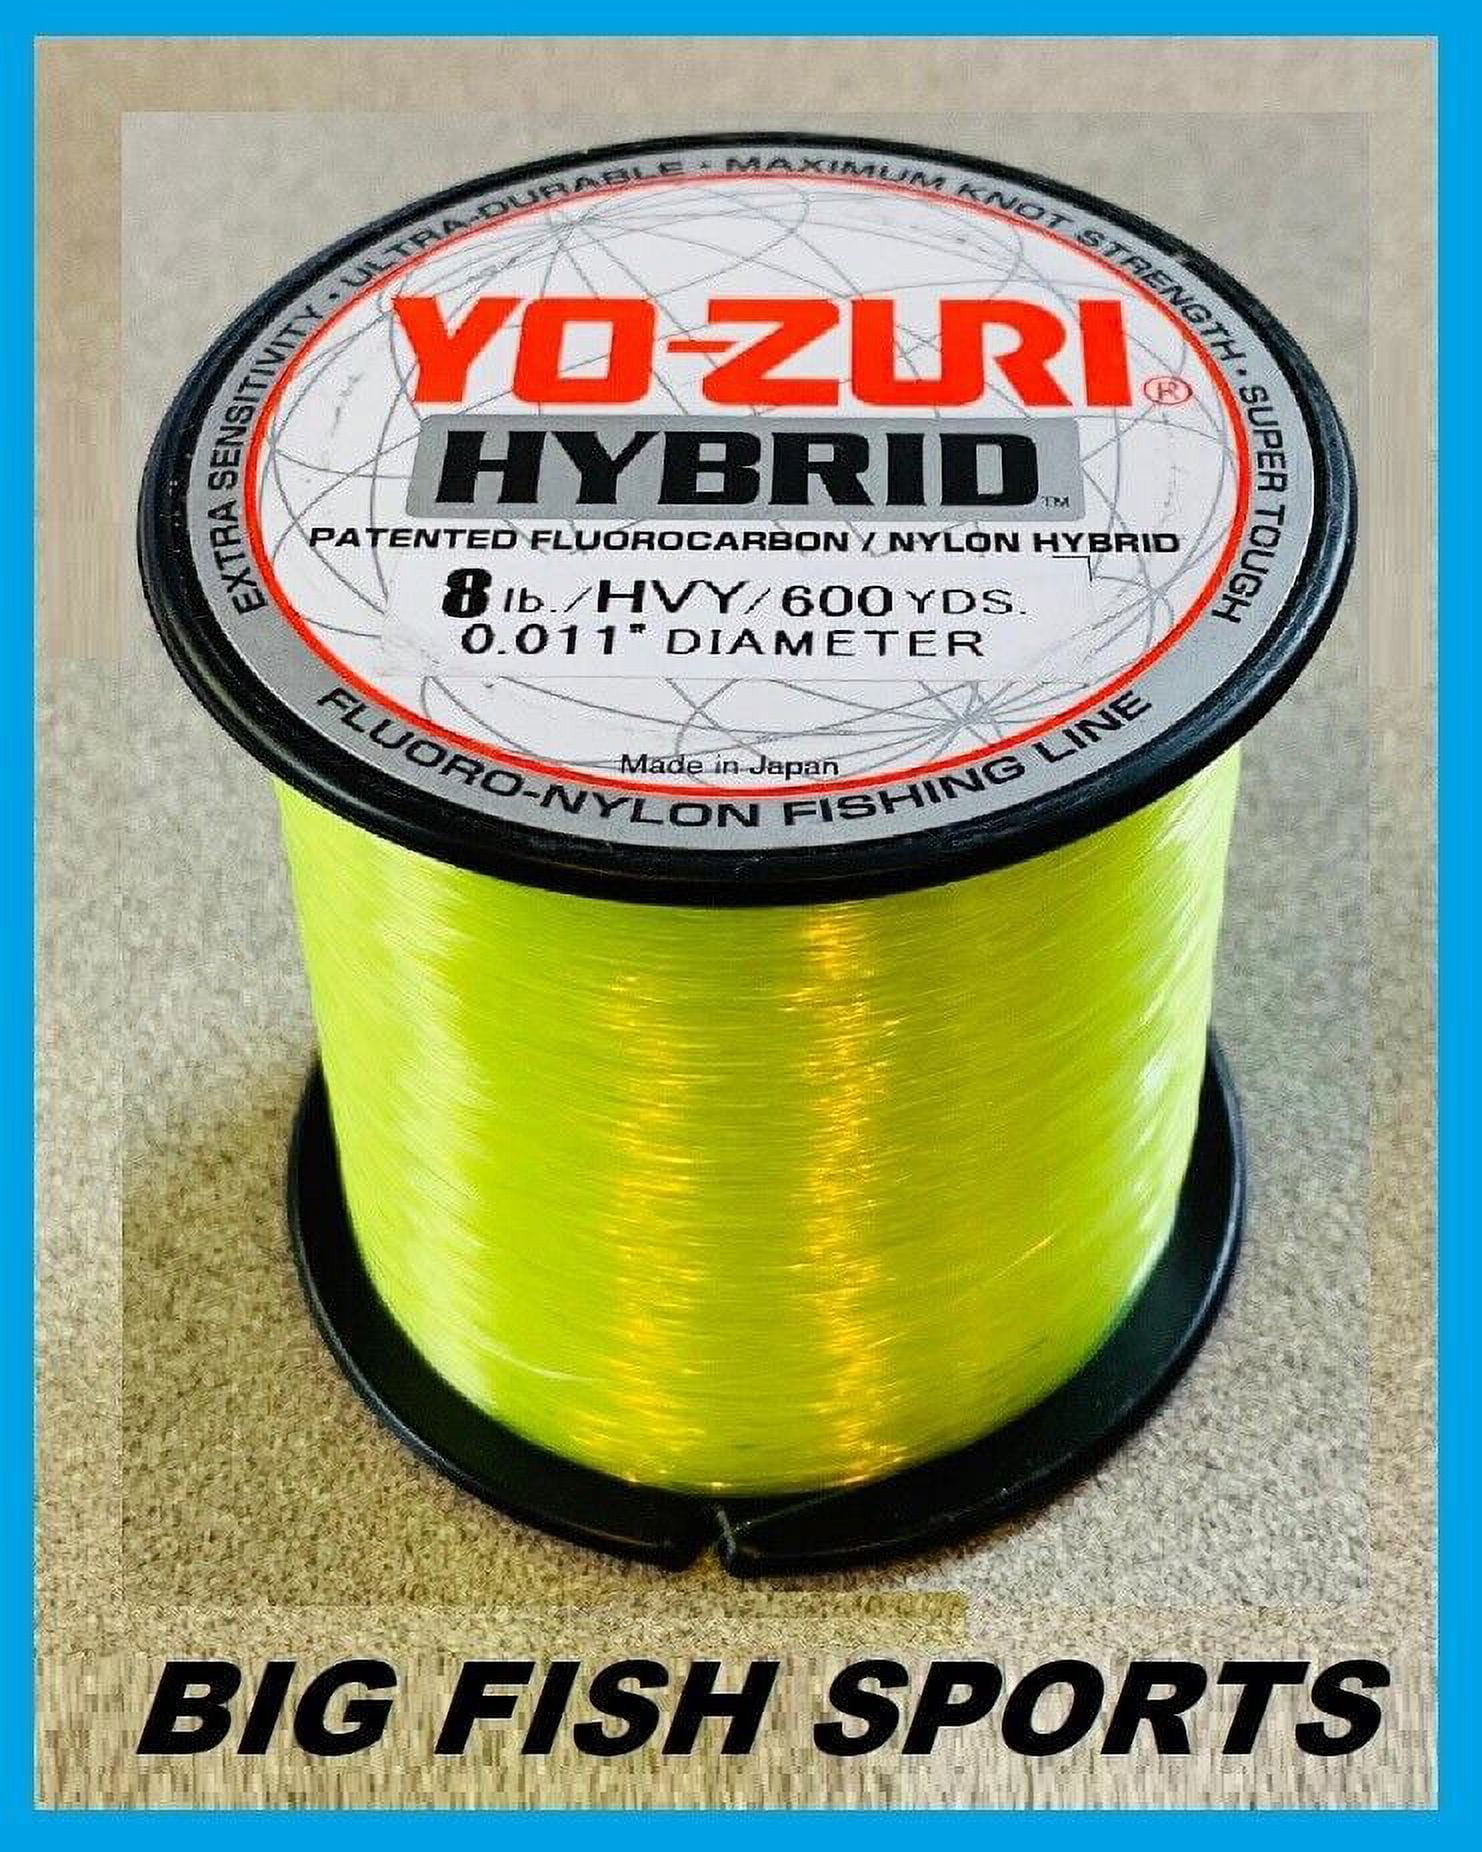 YO-ZURI HYBRID Fluorocarbon Fishing Line 8lb/600yd HIVIS NEW! 